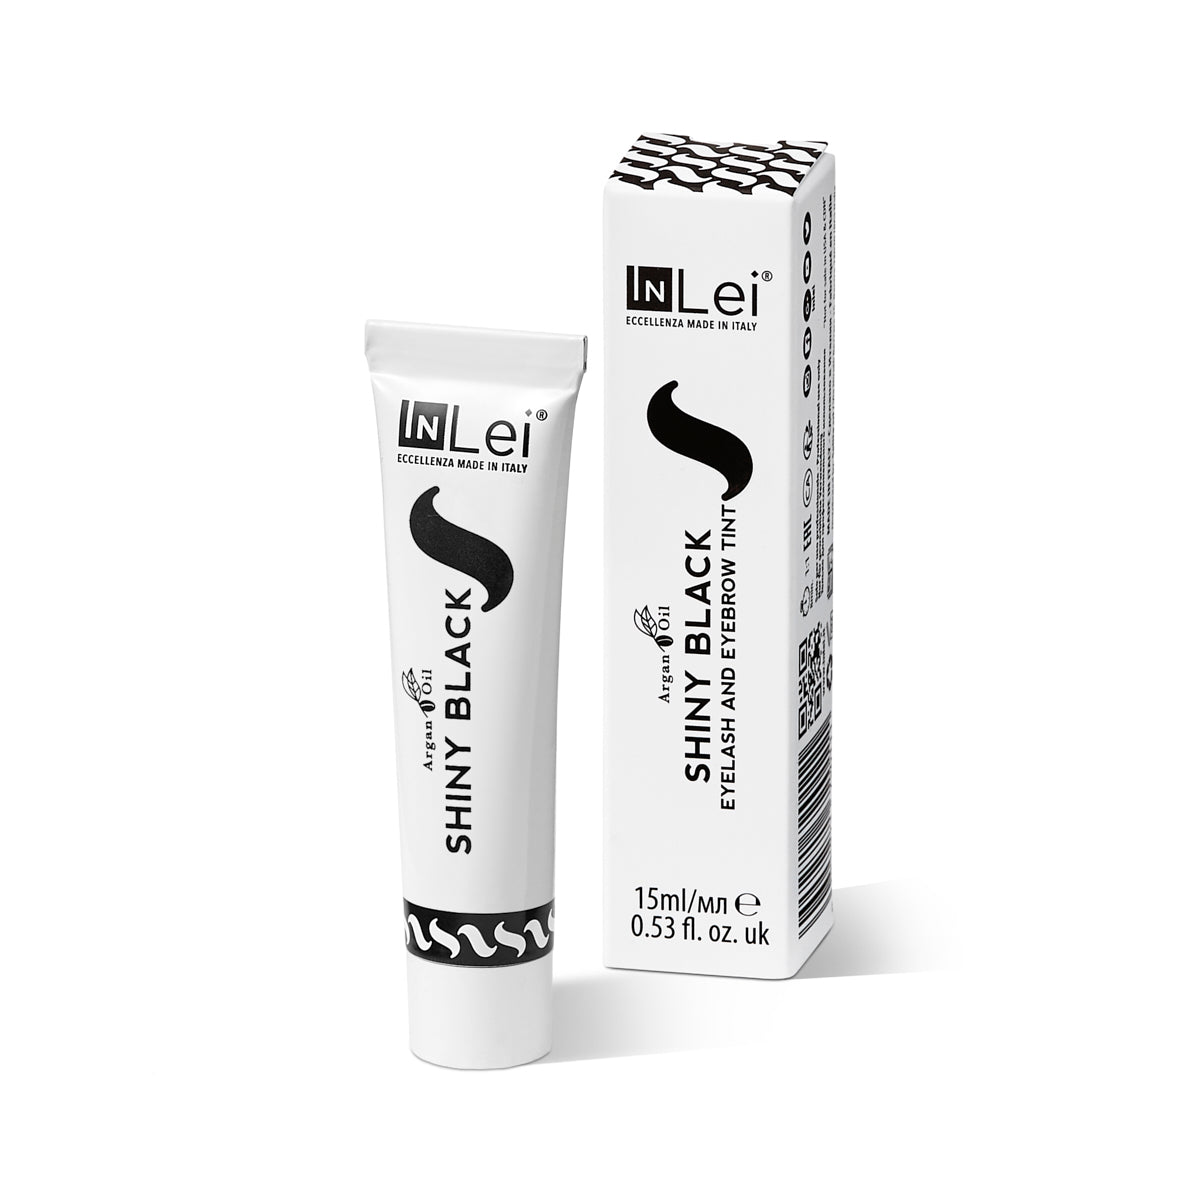 InLei Lash & Brow Tint With Argan Oil - Shiny Black - 15ml